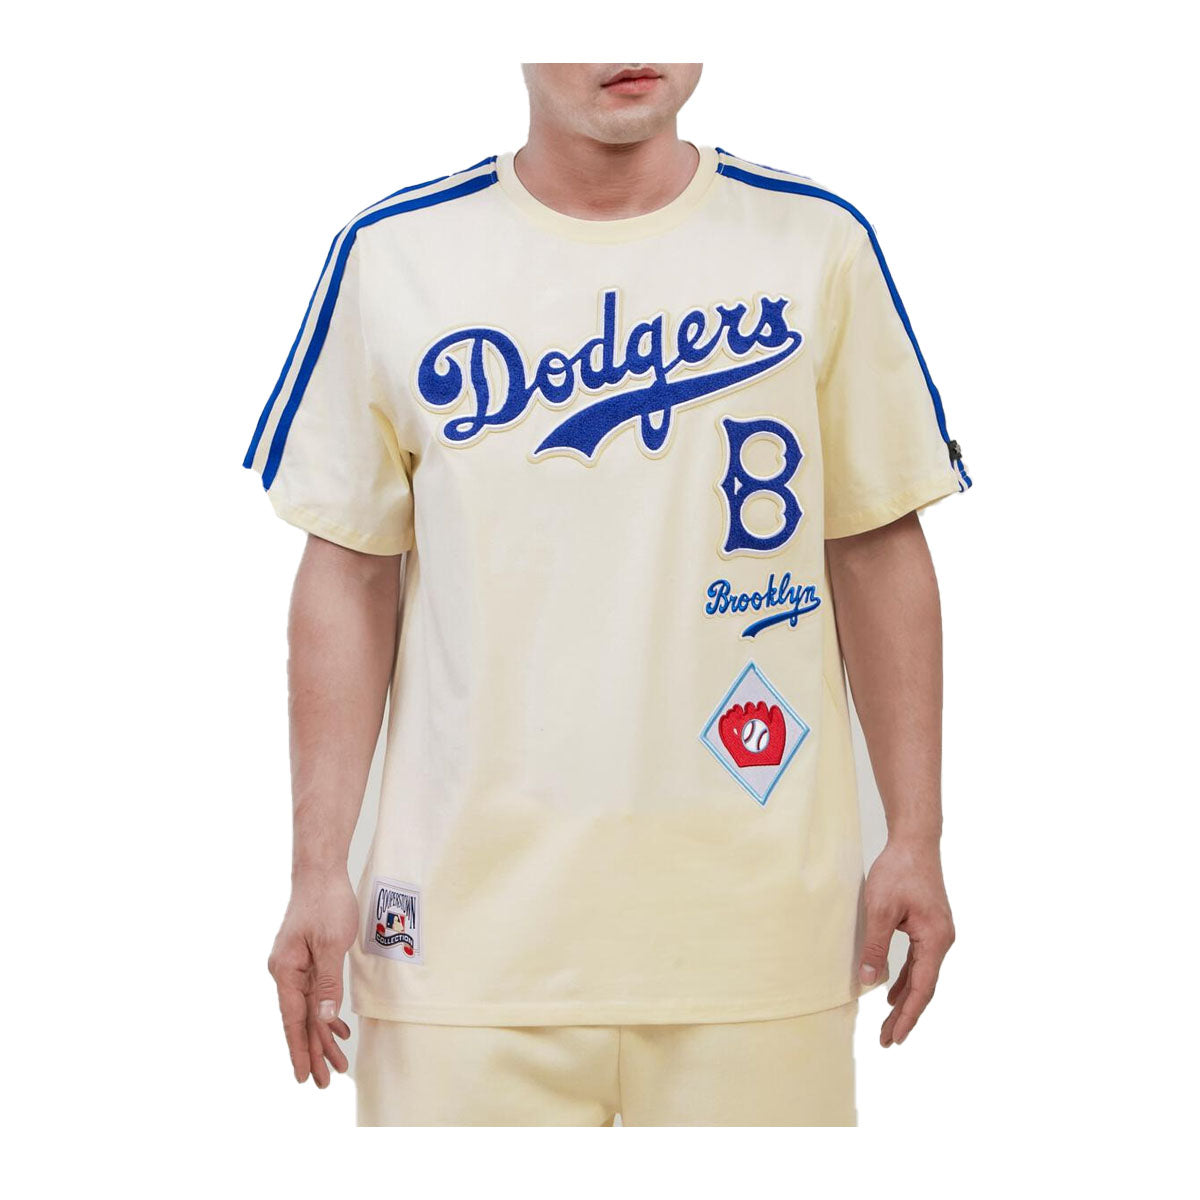 New Era Dodgers Pinstripe Mesh Back Tee - Mens S / White